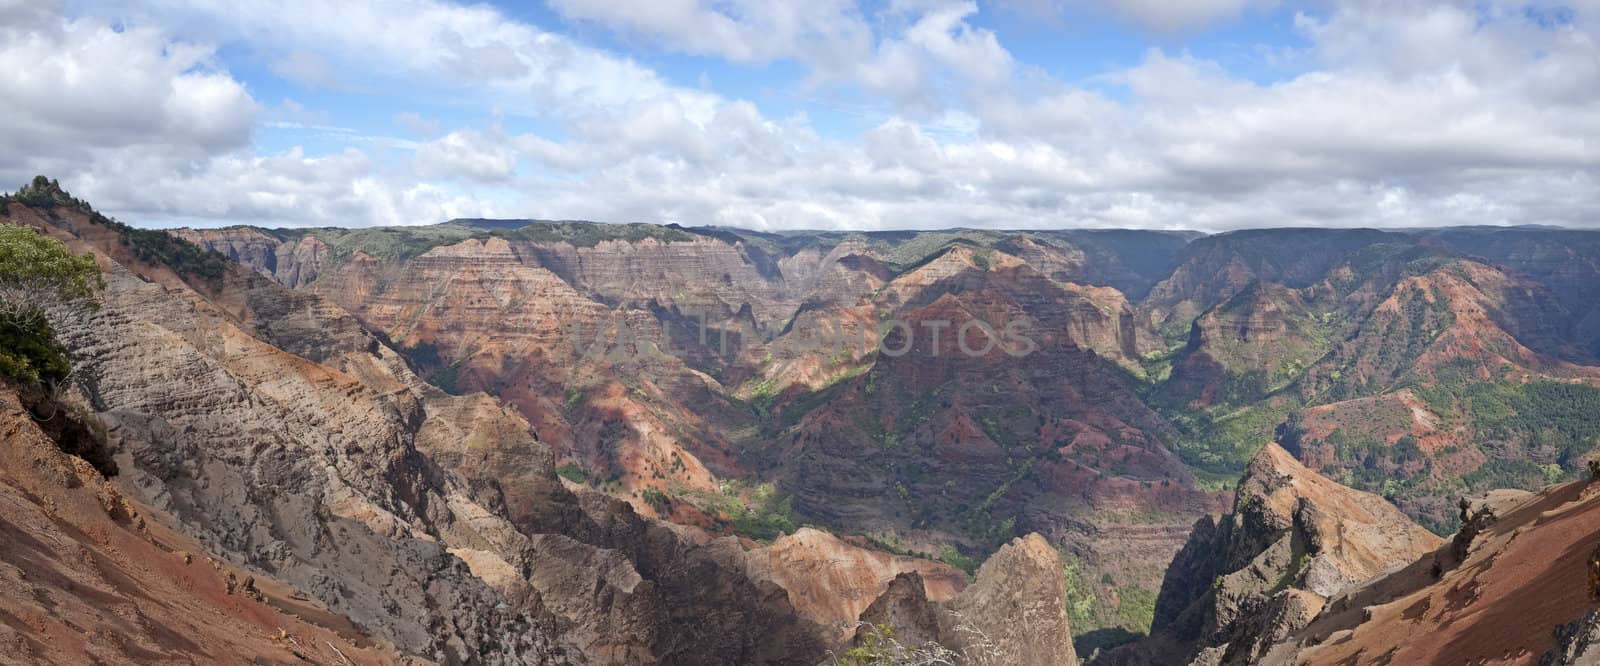 View into the Waimea Canyon on Kauai, Hawaii (the "Grand Canyon of the Pacific")